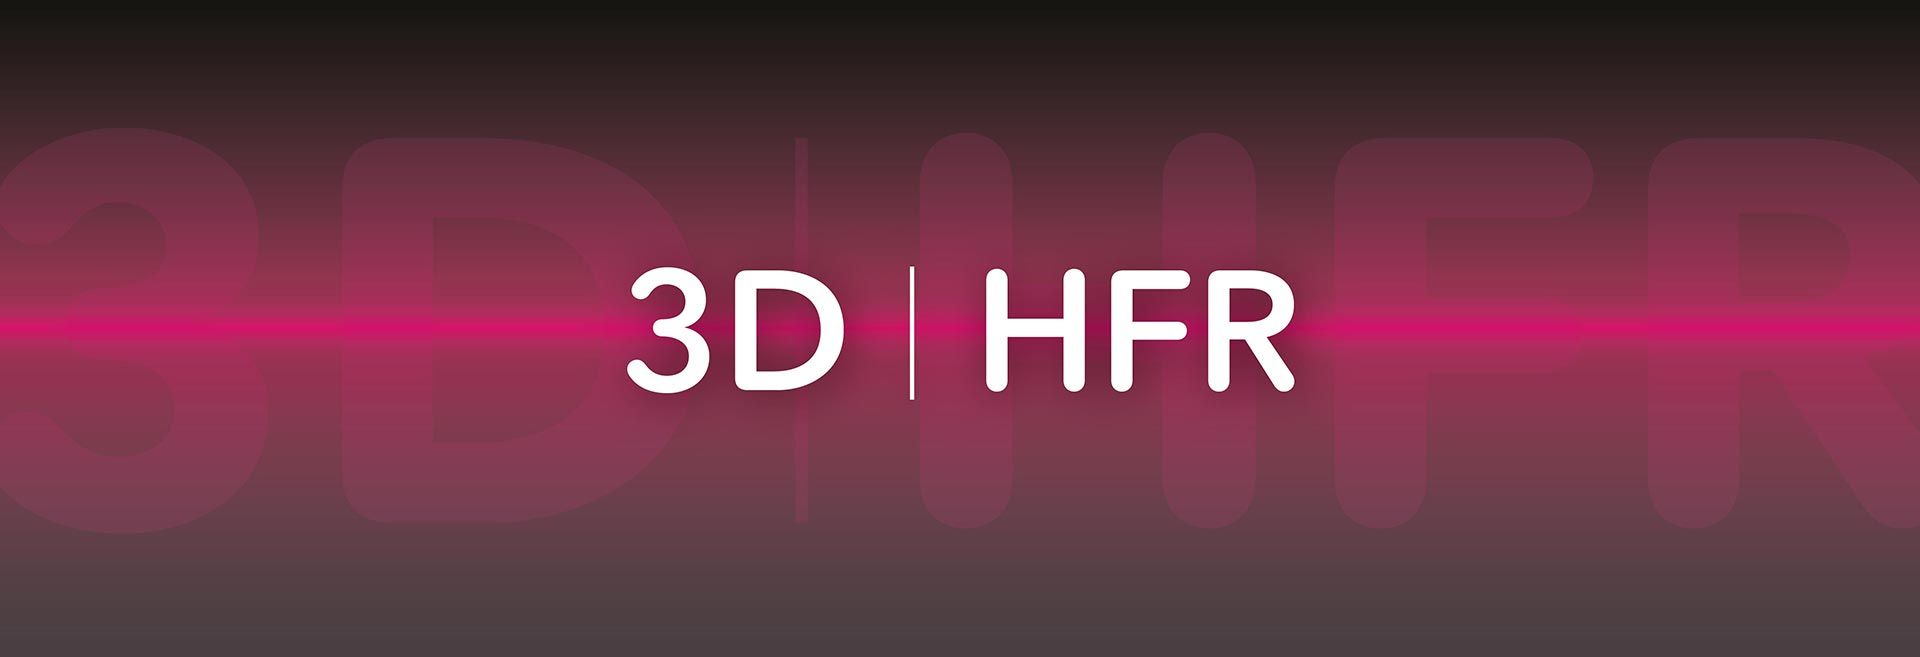 3D hfr, high frame rate